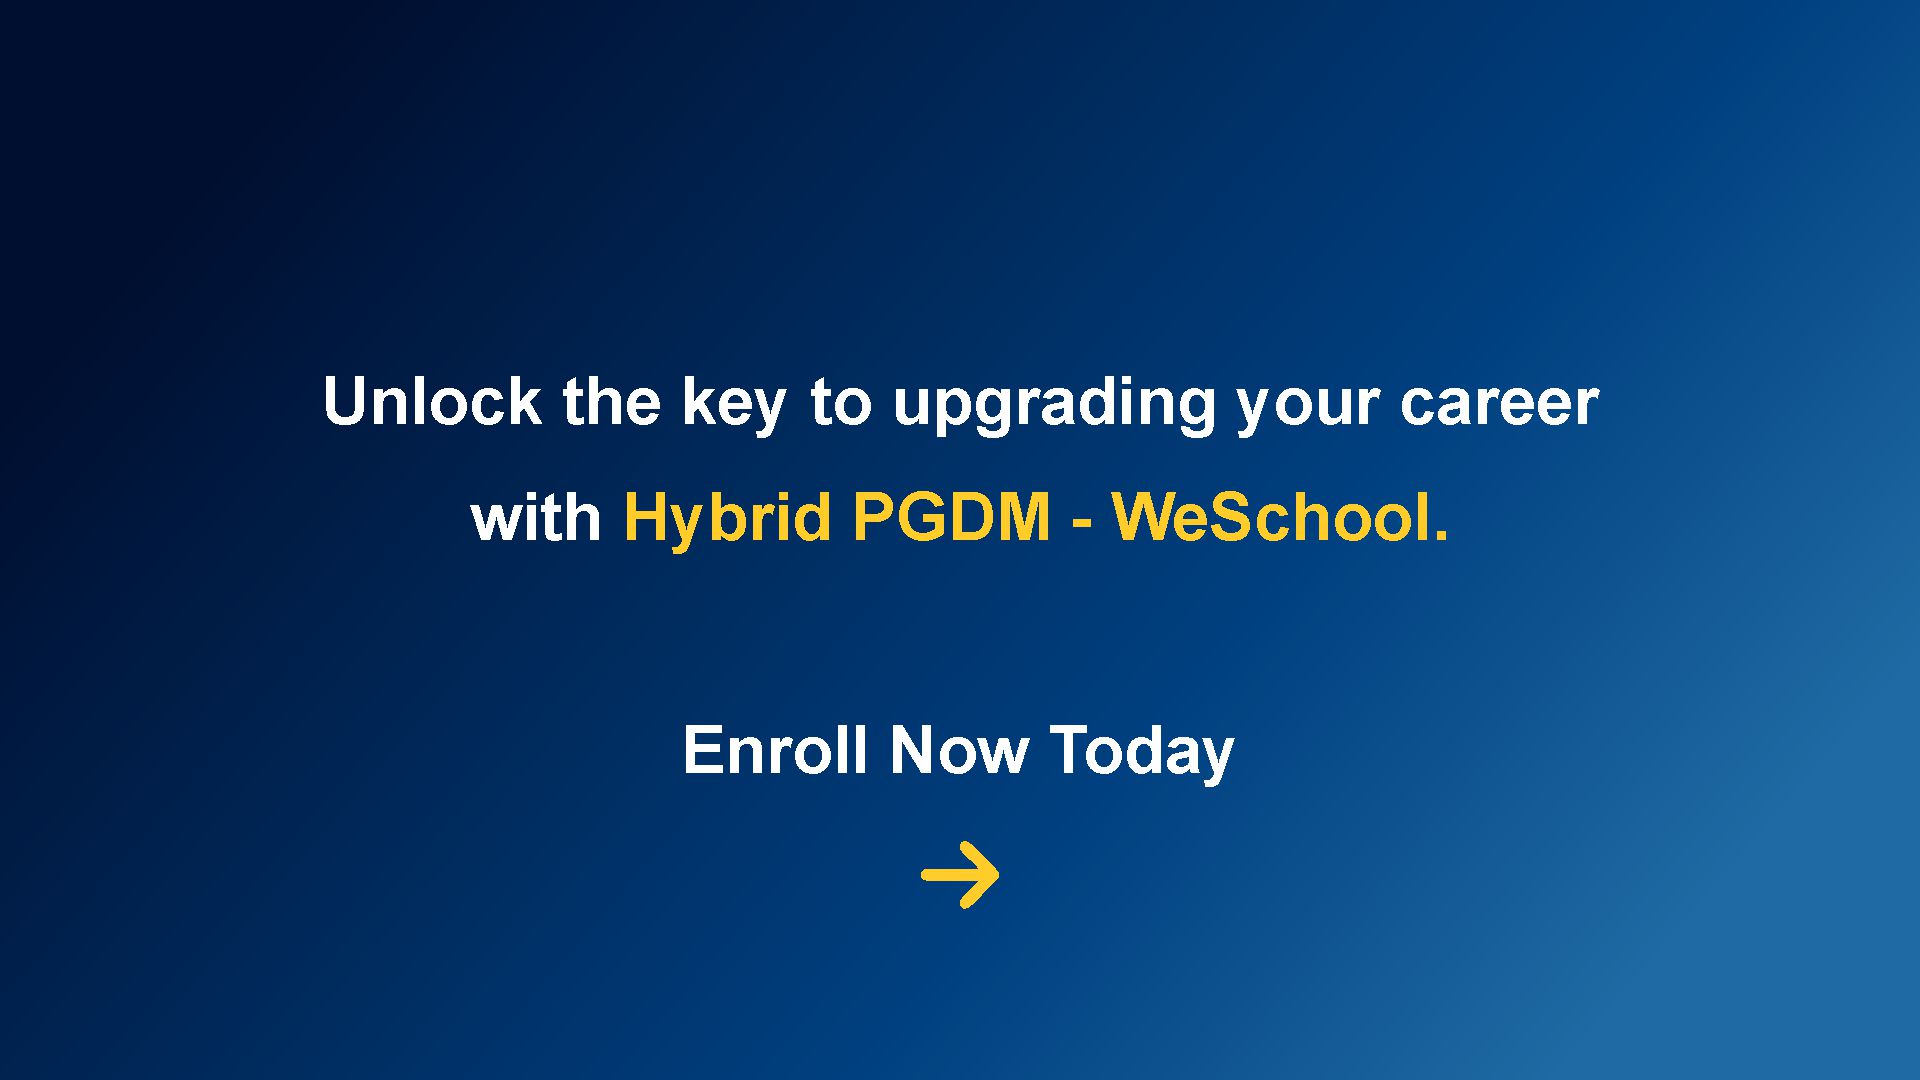 Hybrid-PGDM program Weschool Jaro